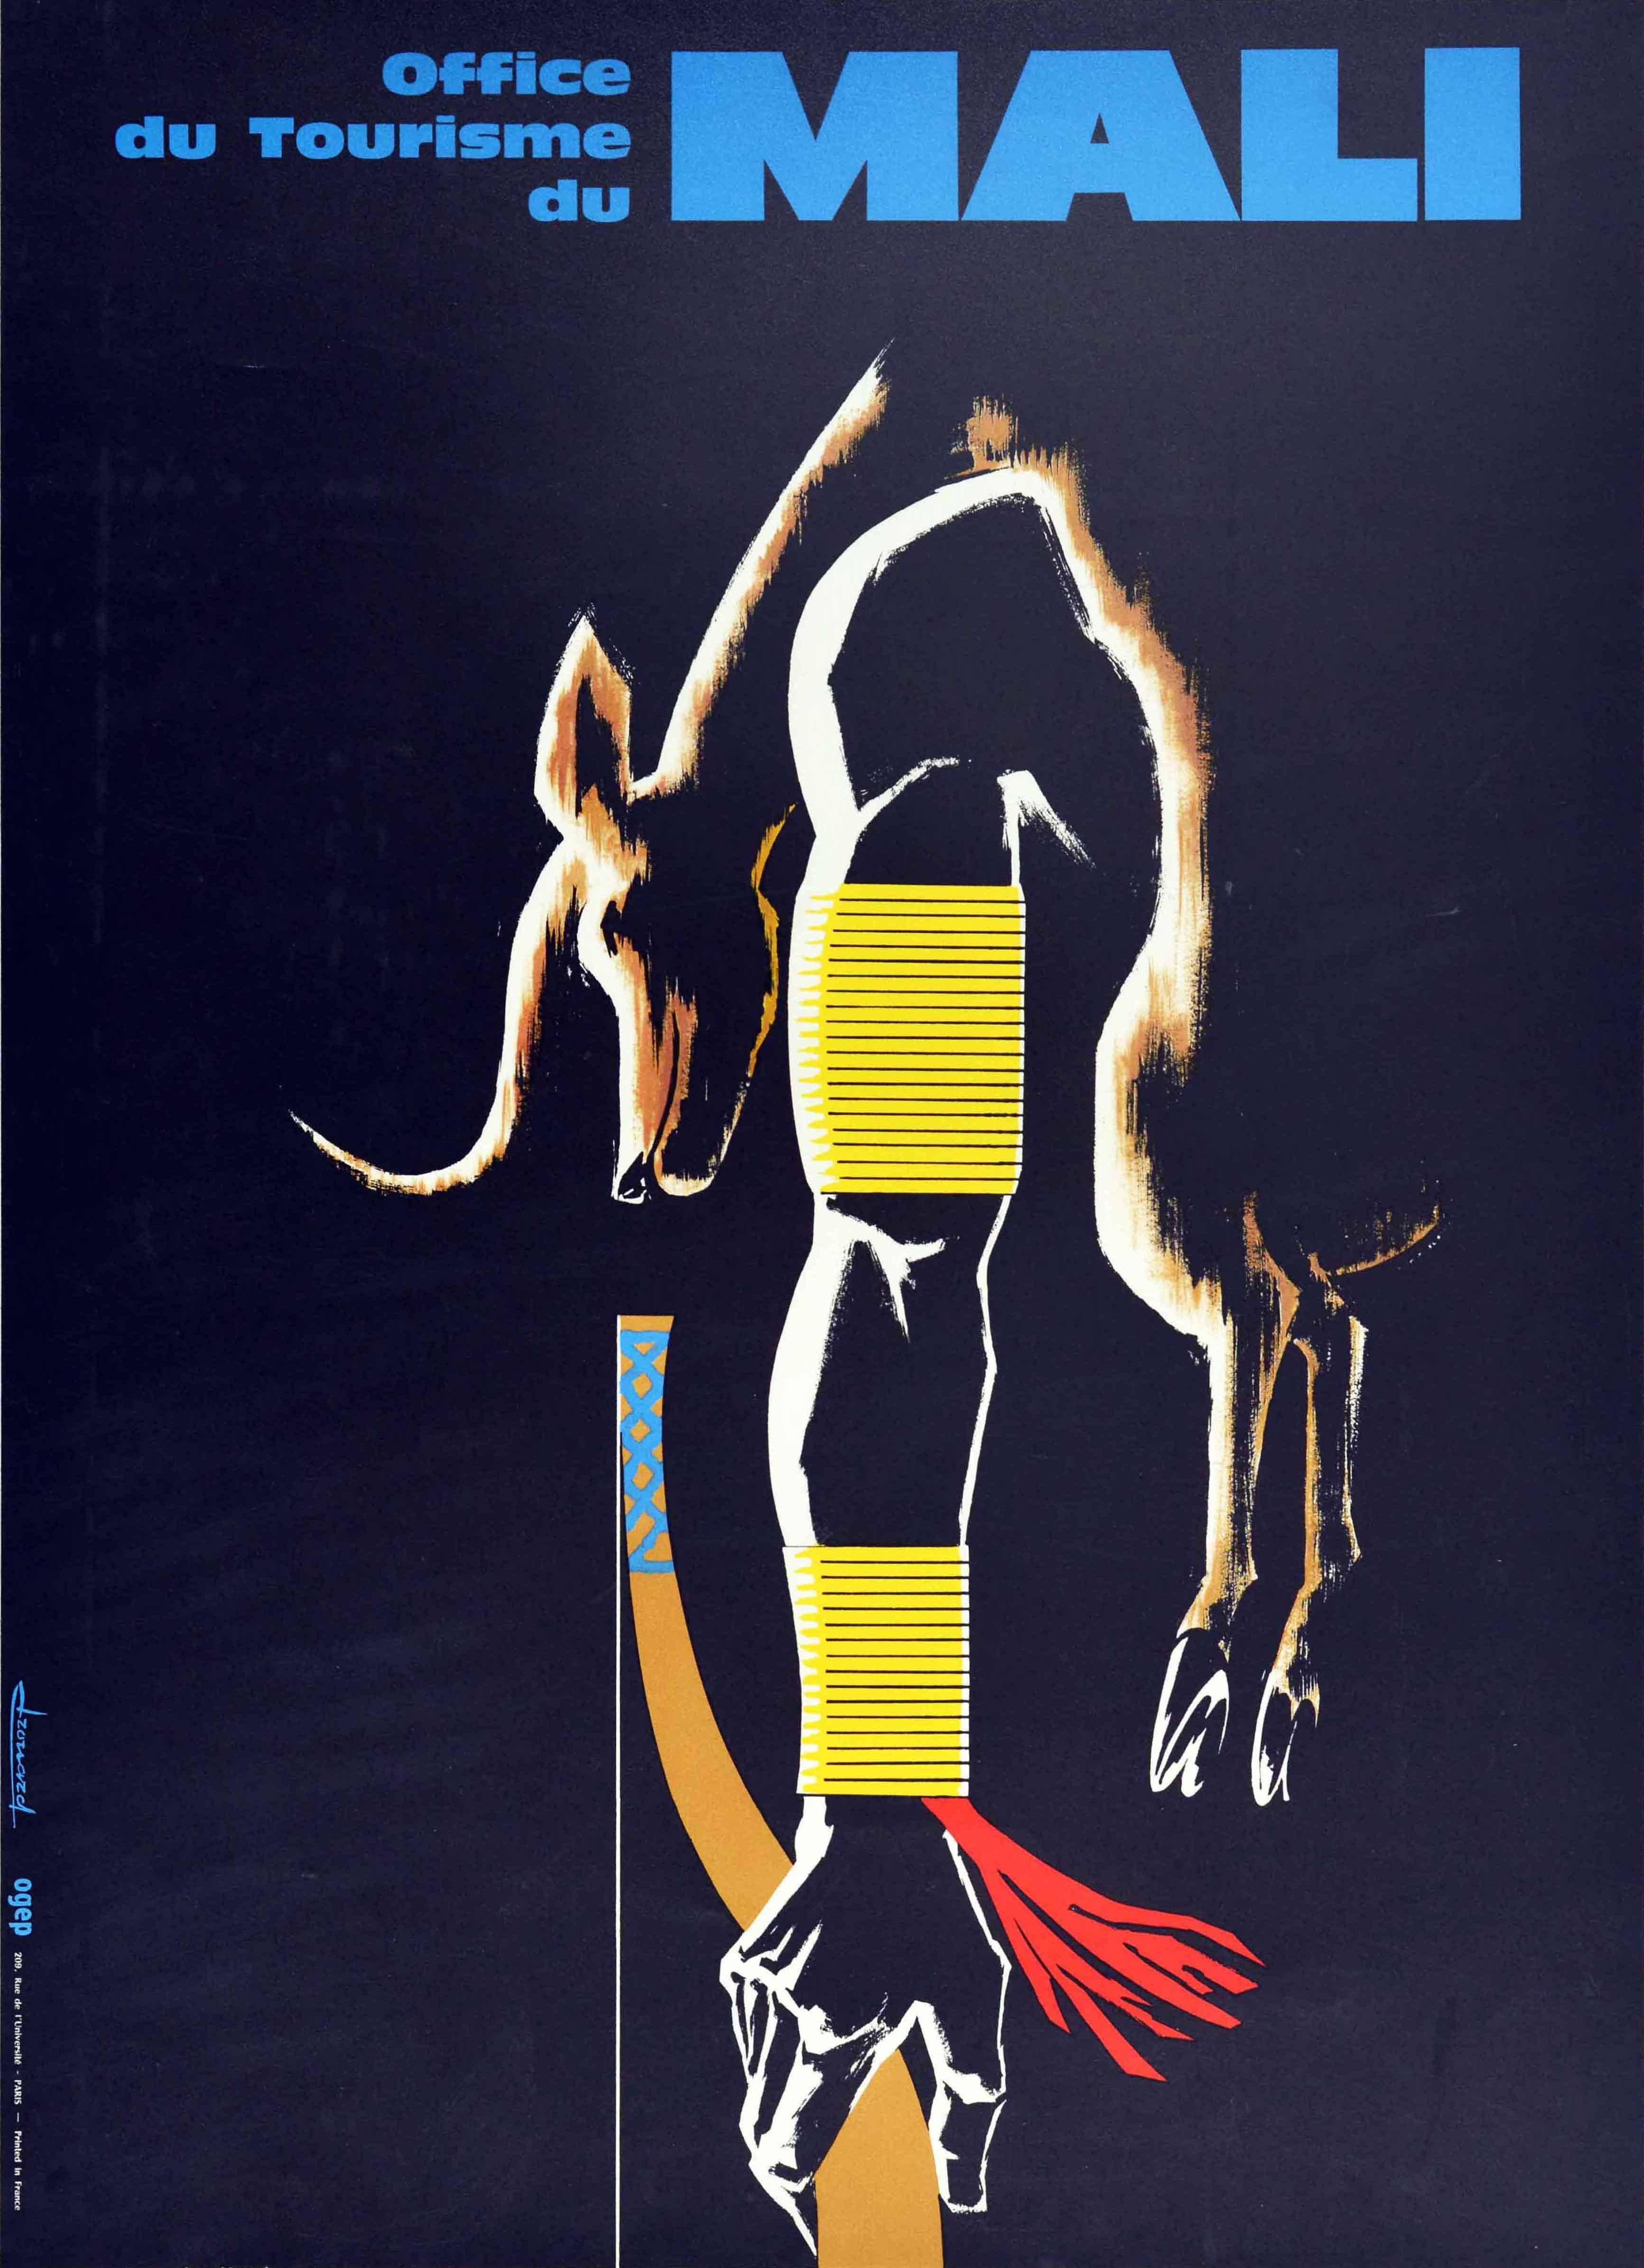 Drouard Print - Original Vintage Travel Poster Mali West Africa Office Du Tourisme Hunter Design